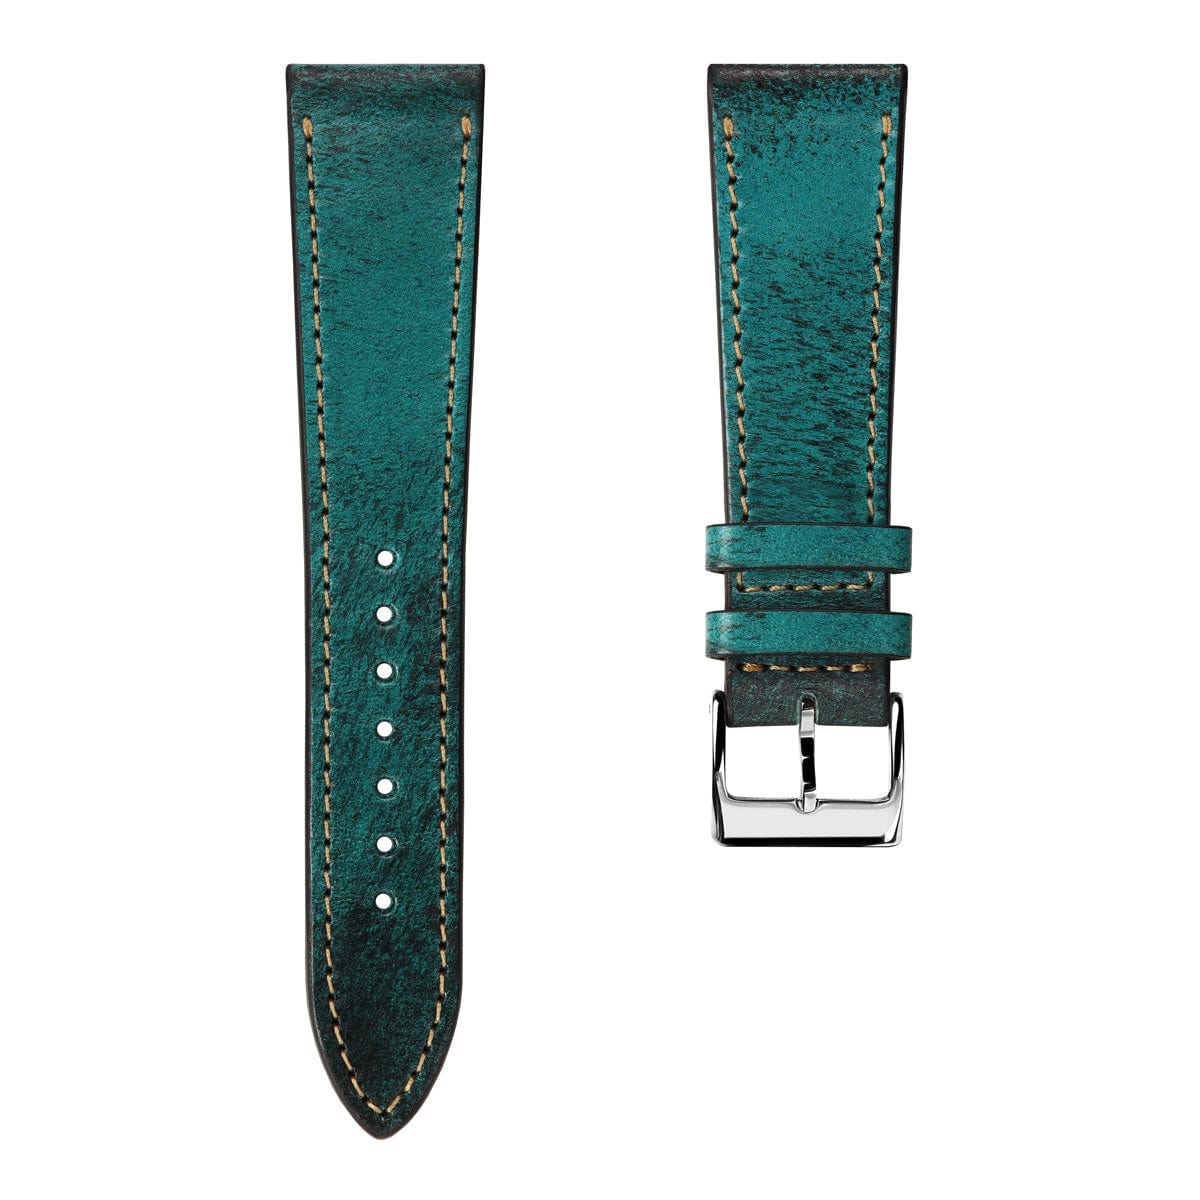 Radstock Vintage Genuine Leather Watch Strap - Vintage Turquoise